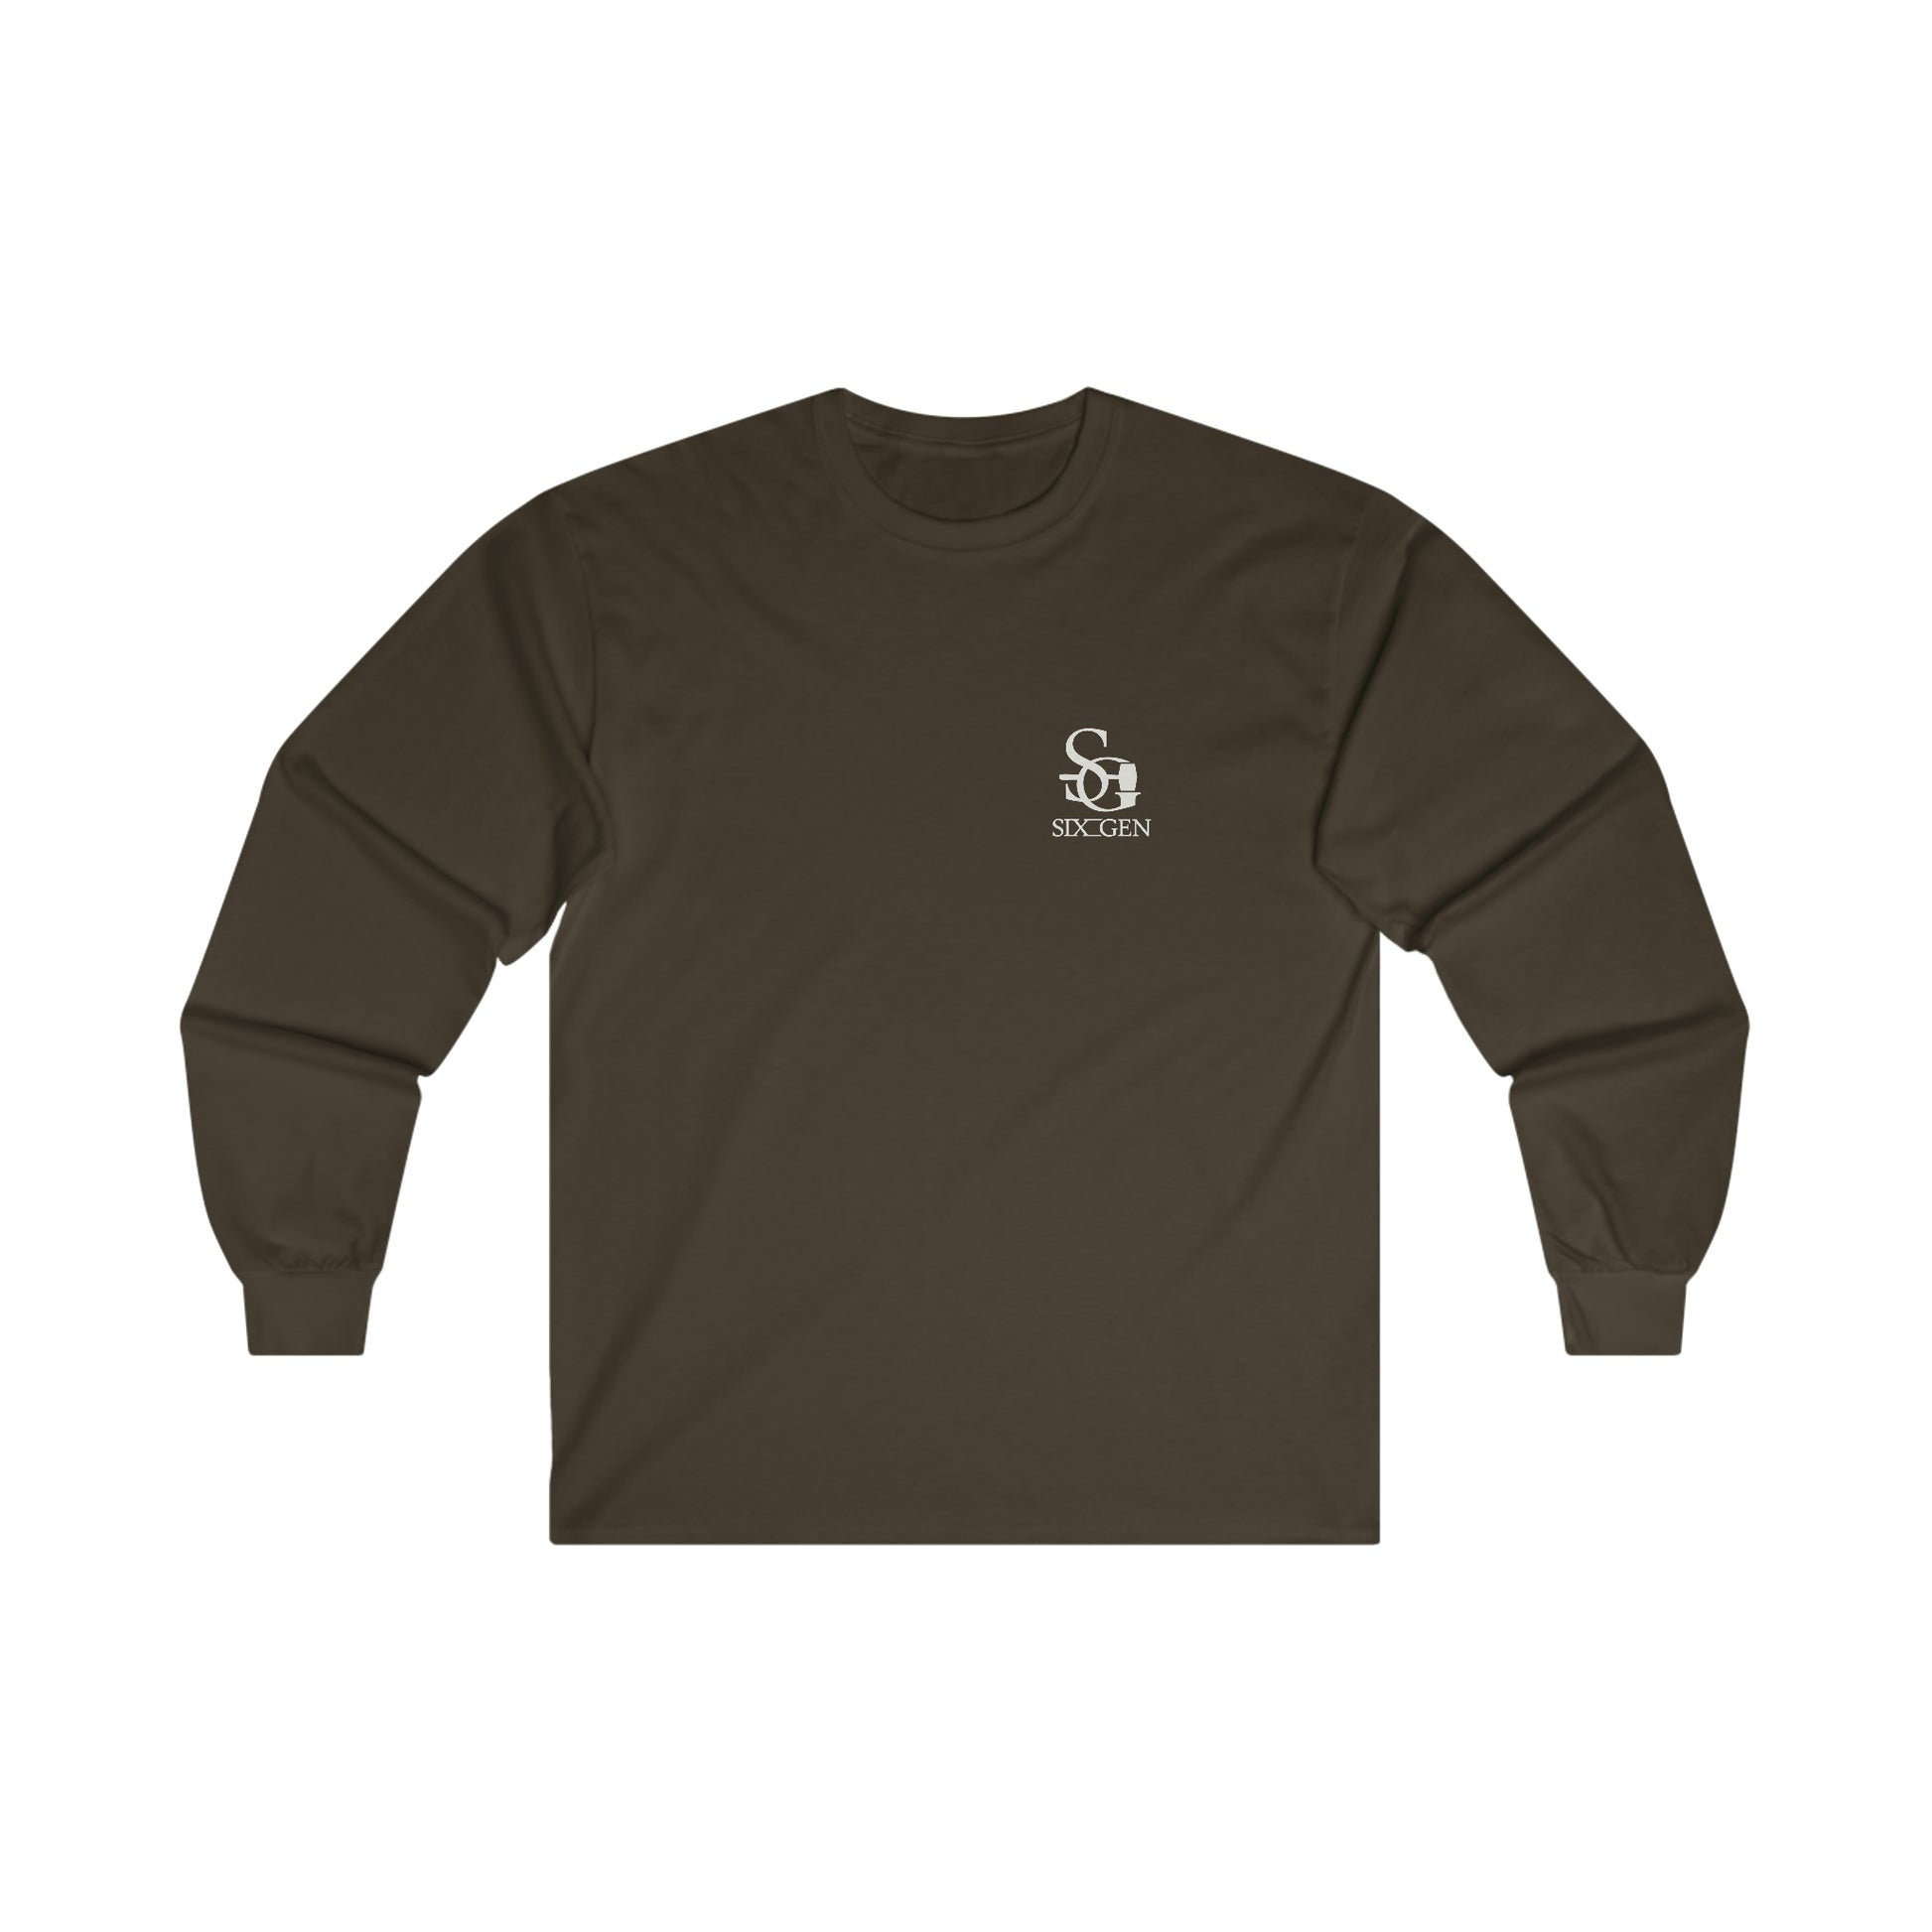 Six-Gen Forge Long Sleeve Cotton T Shirt